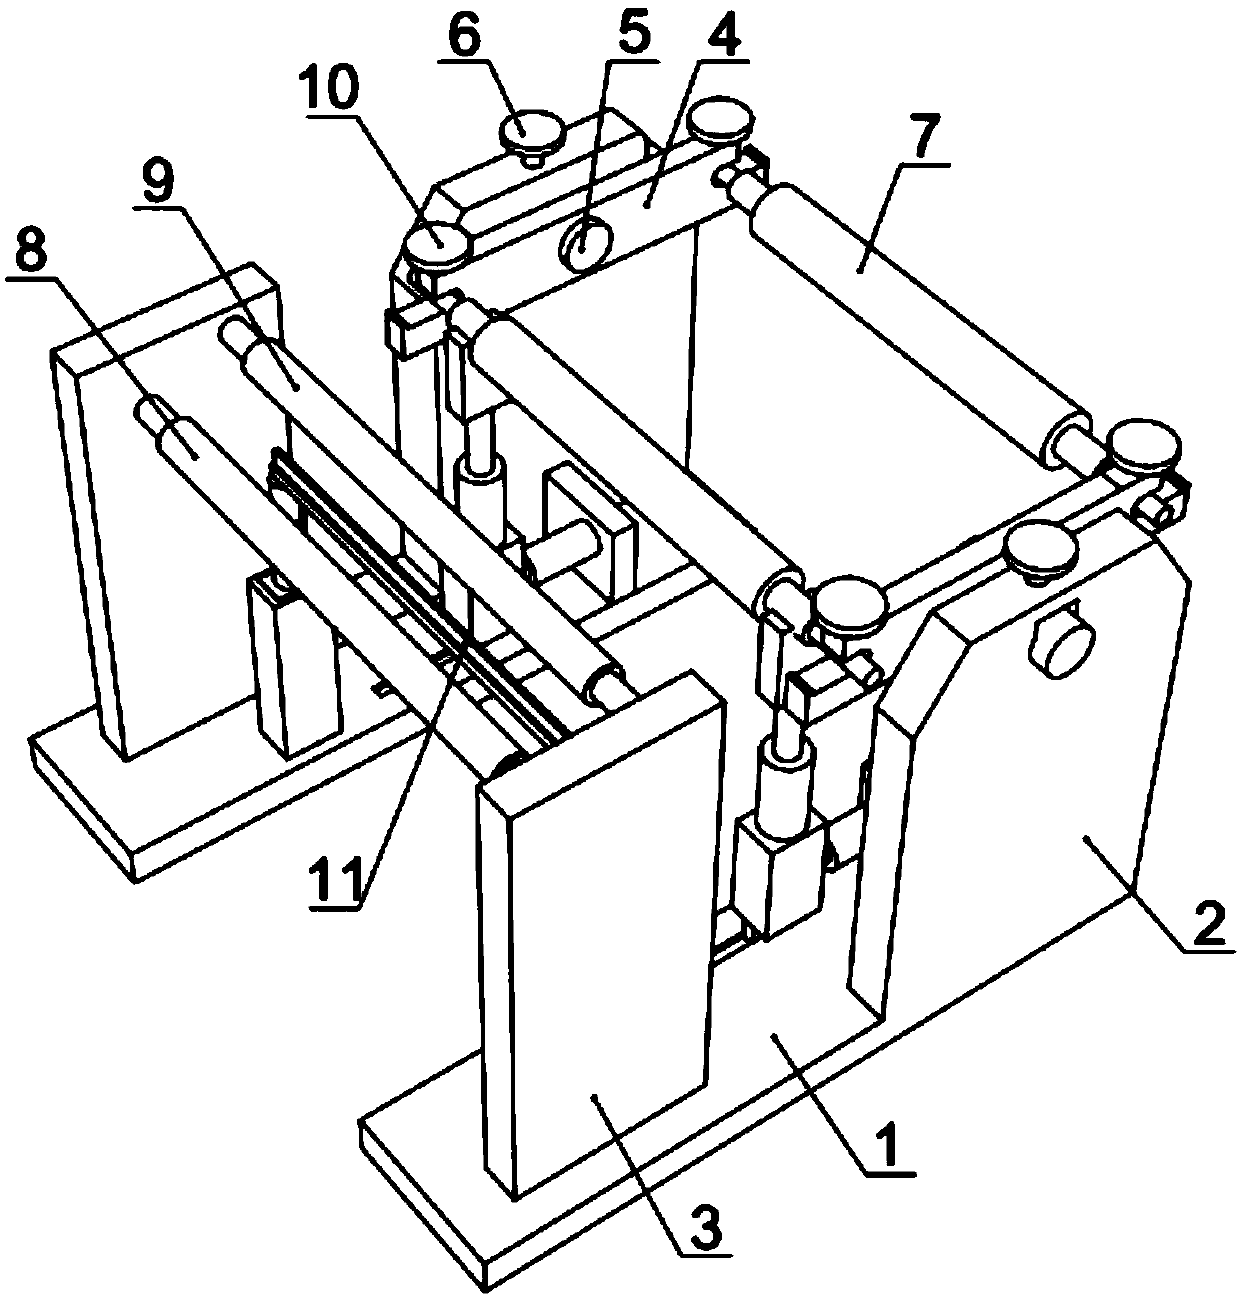 Cloth winding mechanism of cloth printing machine